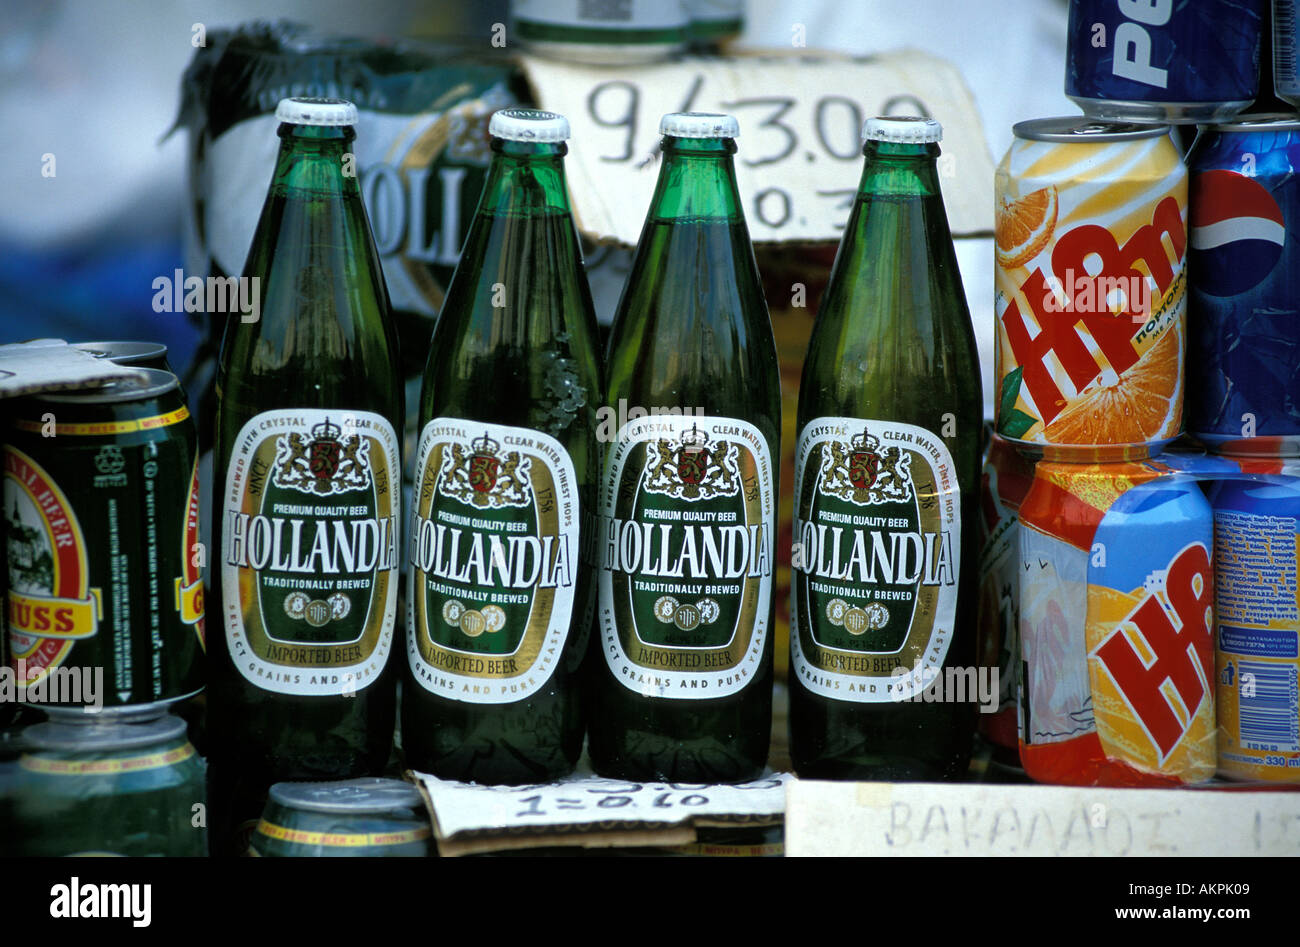 Athens Hollandia beer bottles Stock Photo